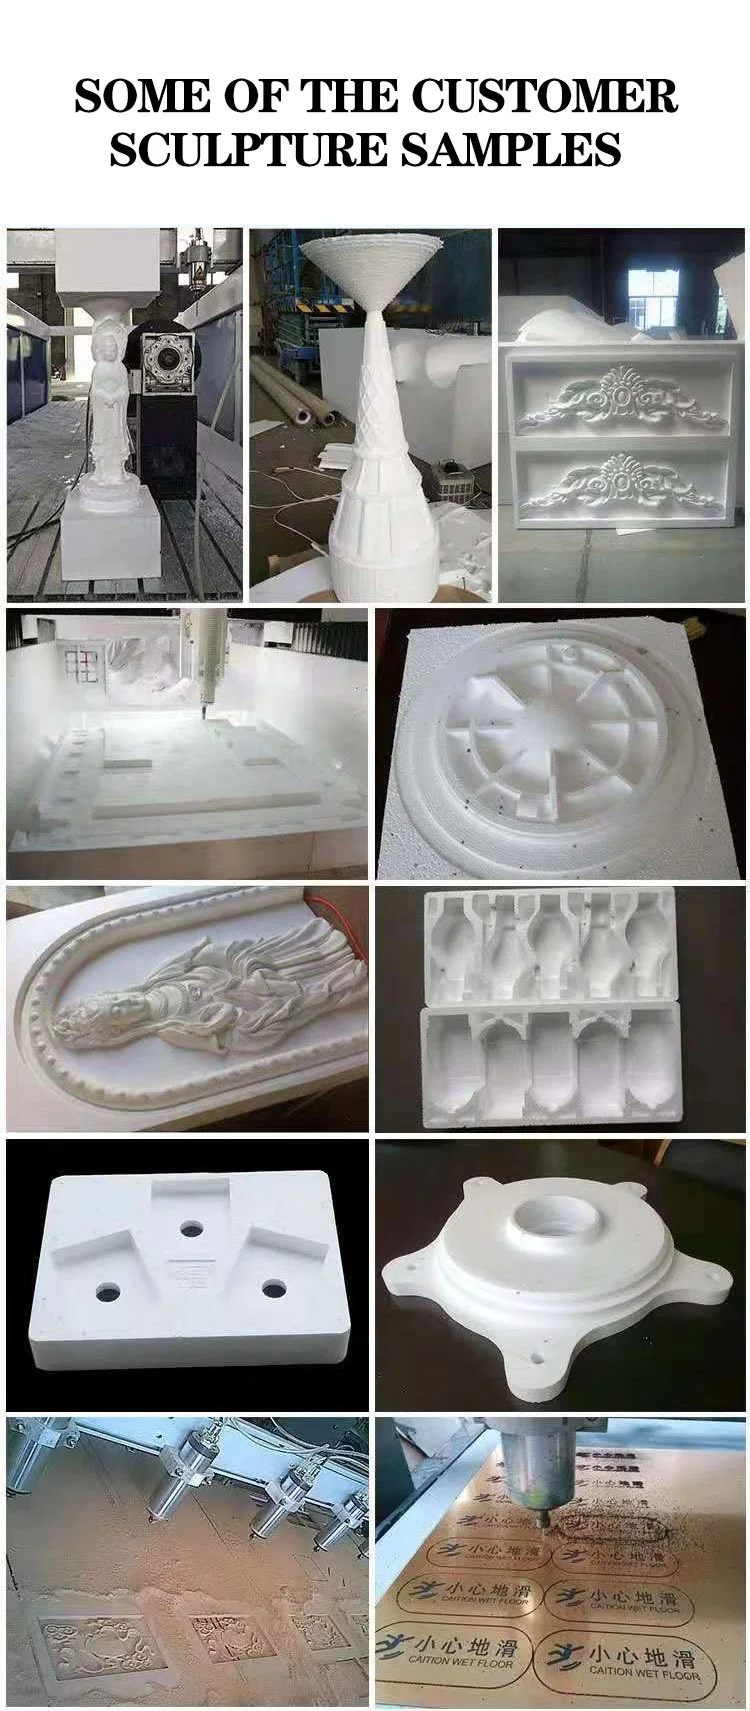 4 Axis Styrofoam Statue 3D Cutting Engraving Foam CNC Router Milling Machine for EPS Styrofoam Polystyrene